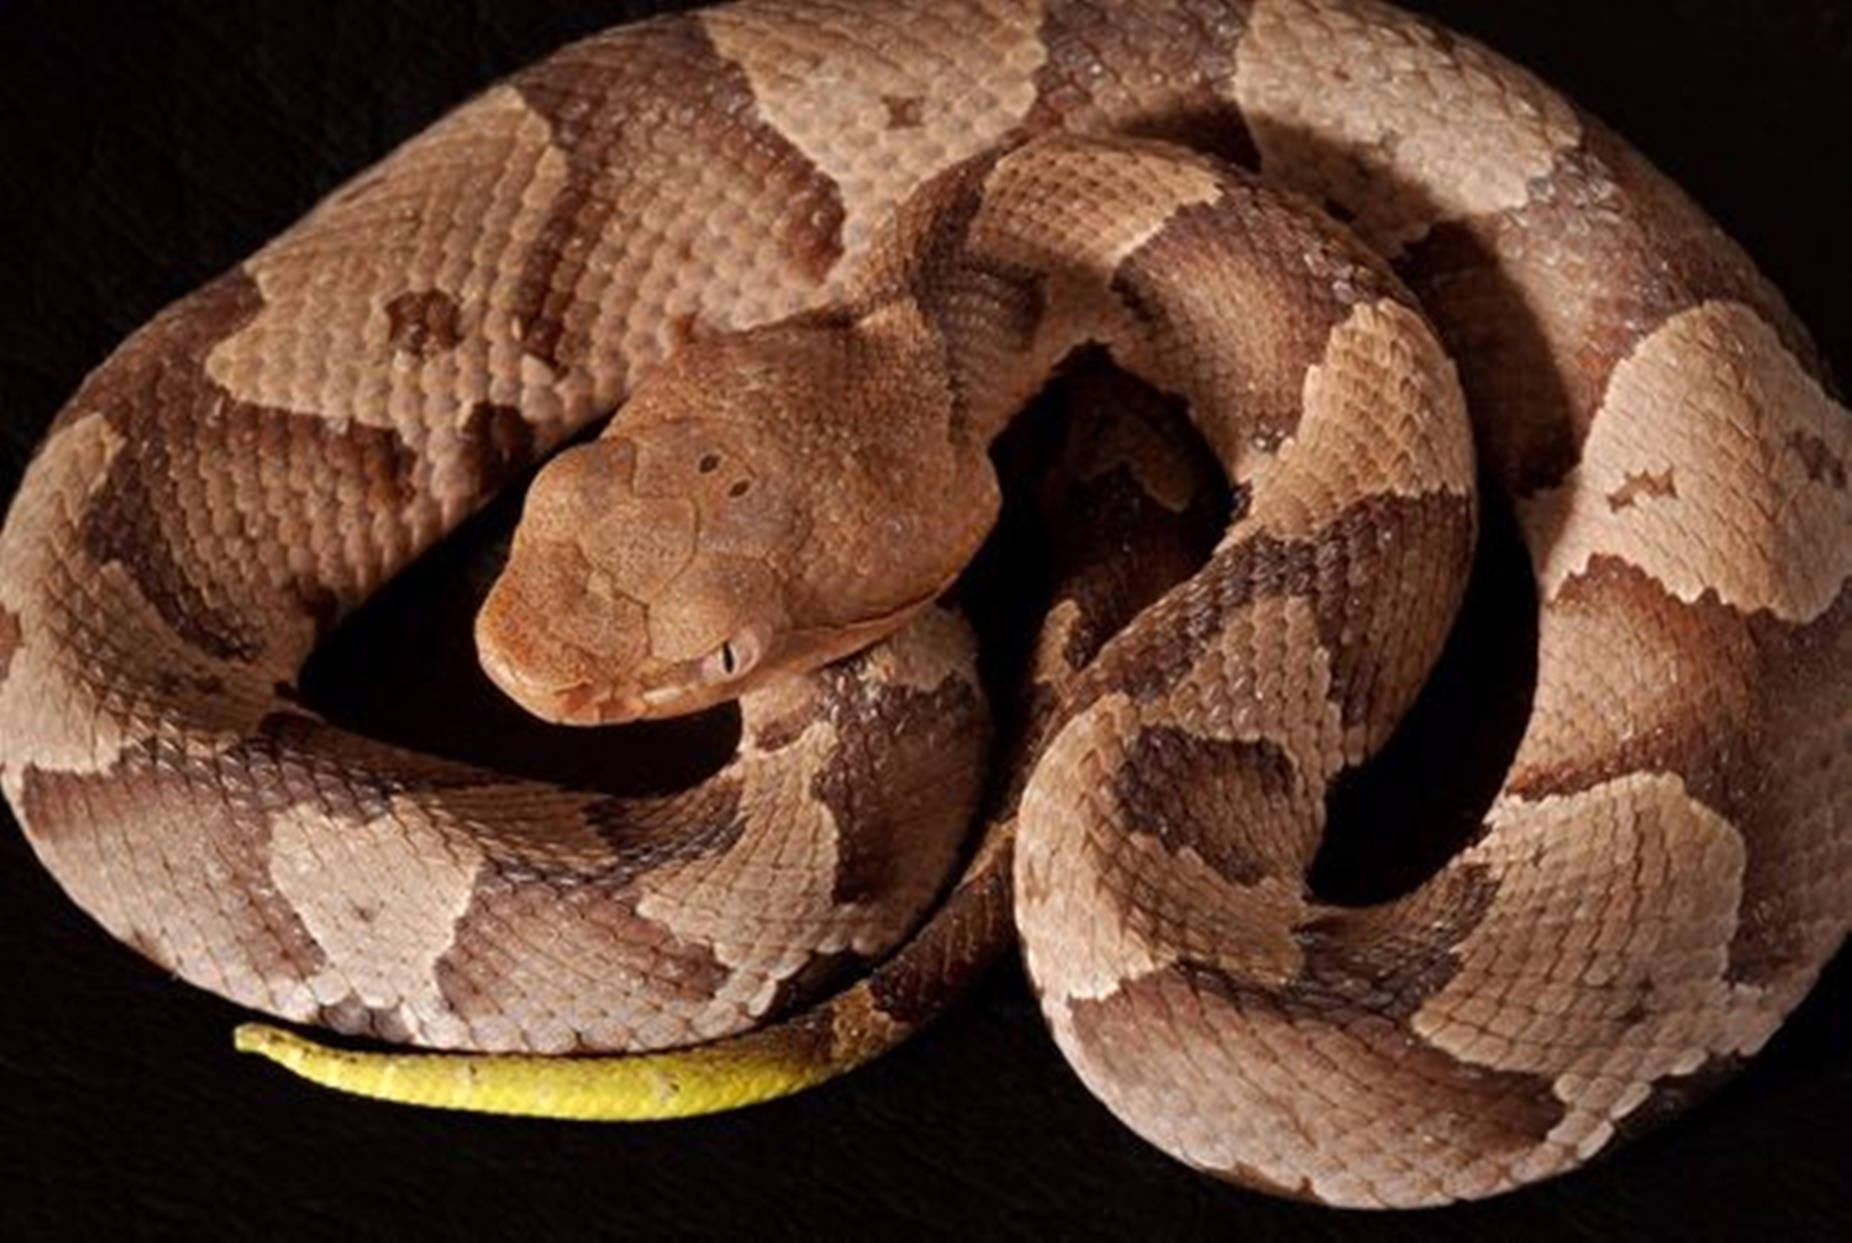 Majestic Copperhead Snake in Natural Habitat Wallpaper